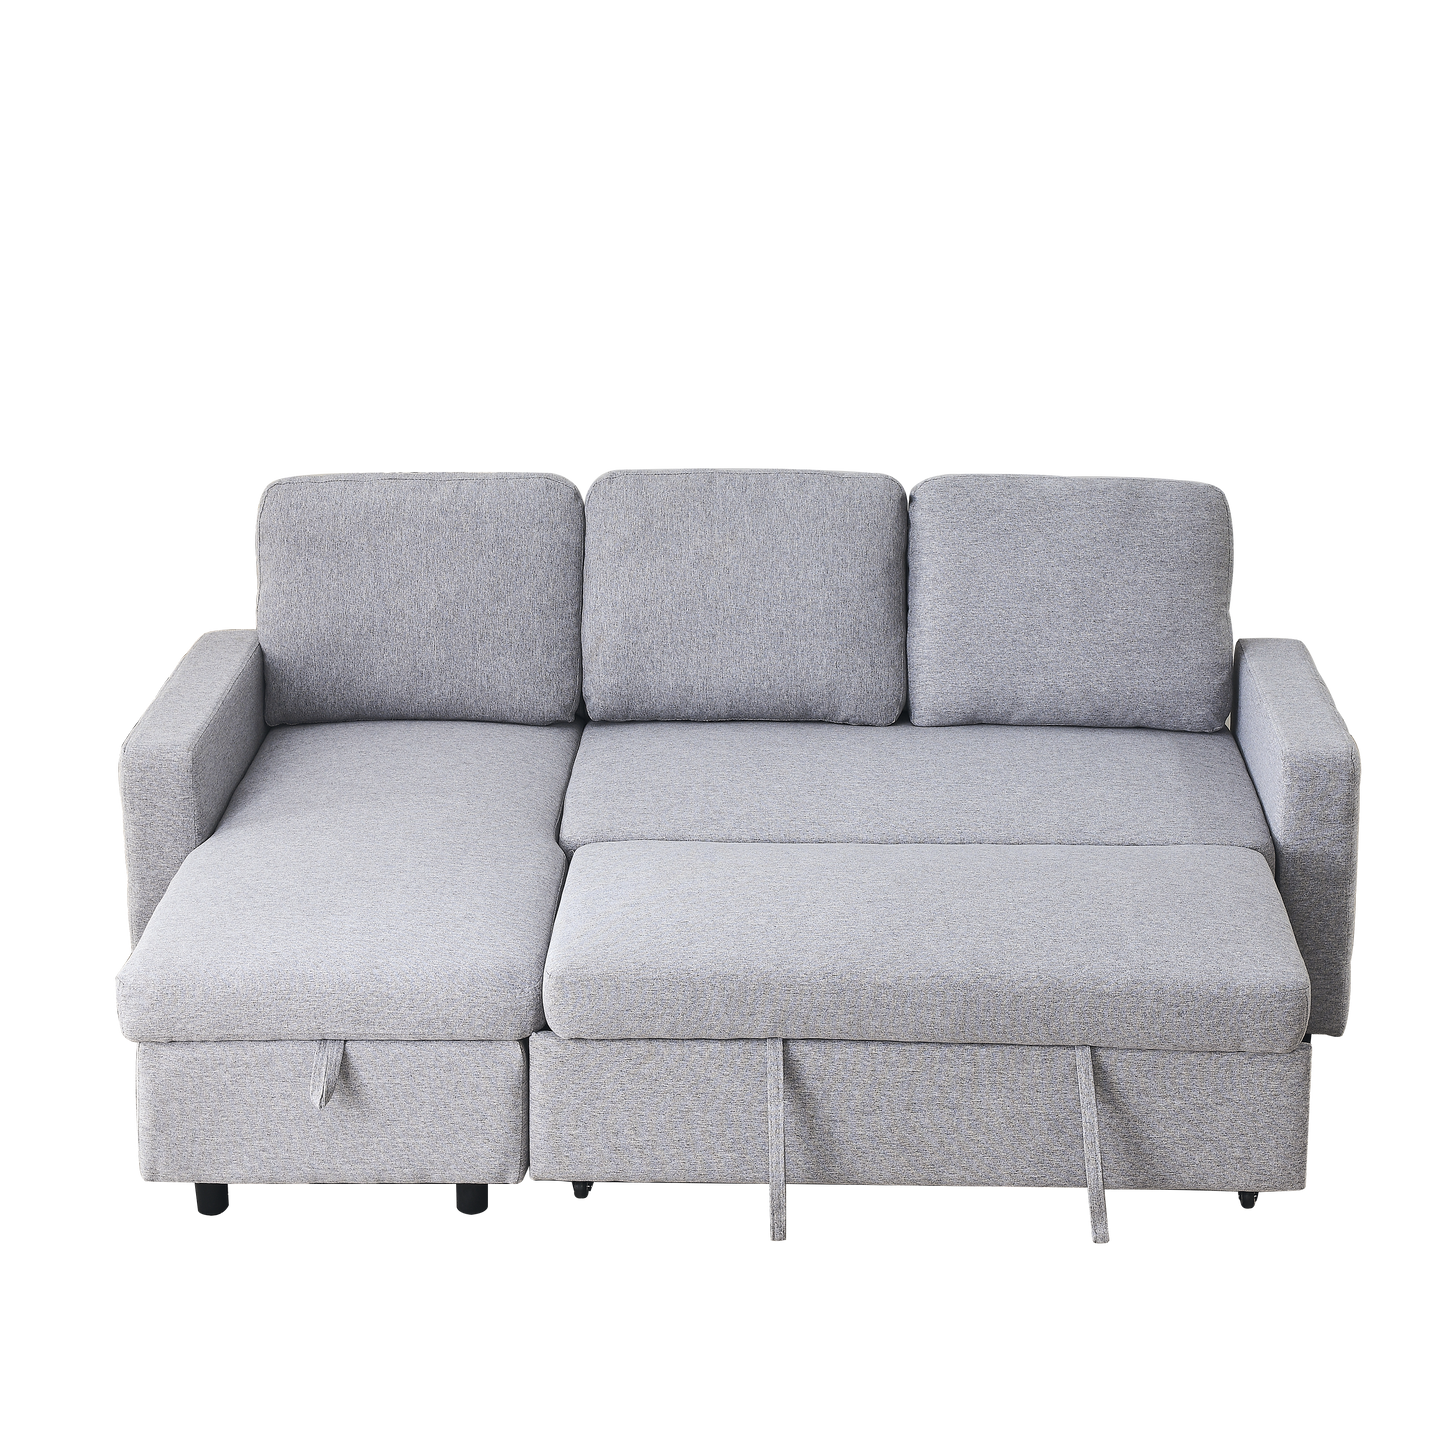 Reversible Sleeper Sofa Bed, Living Room Sets